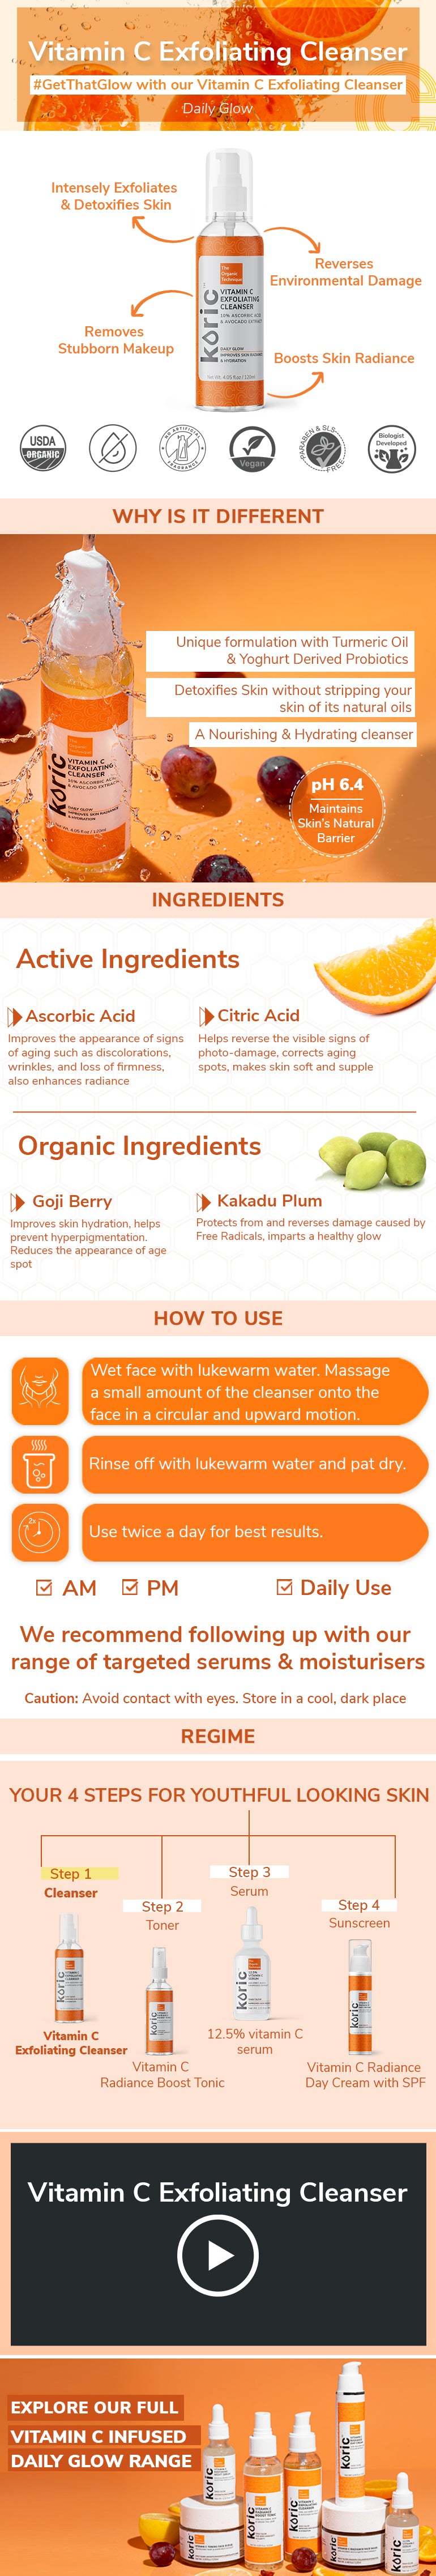 Koric Daily Glow Vitamin C Exfoliating Cleanser, Improves skin radiance, Brightness & hydration